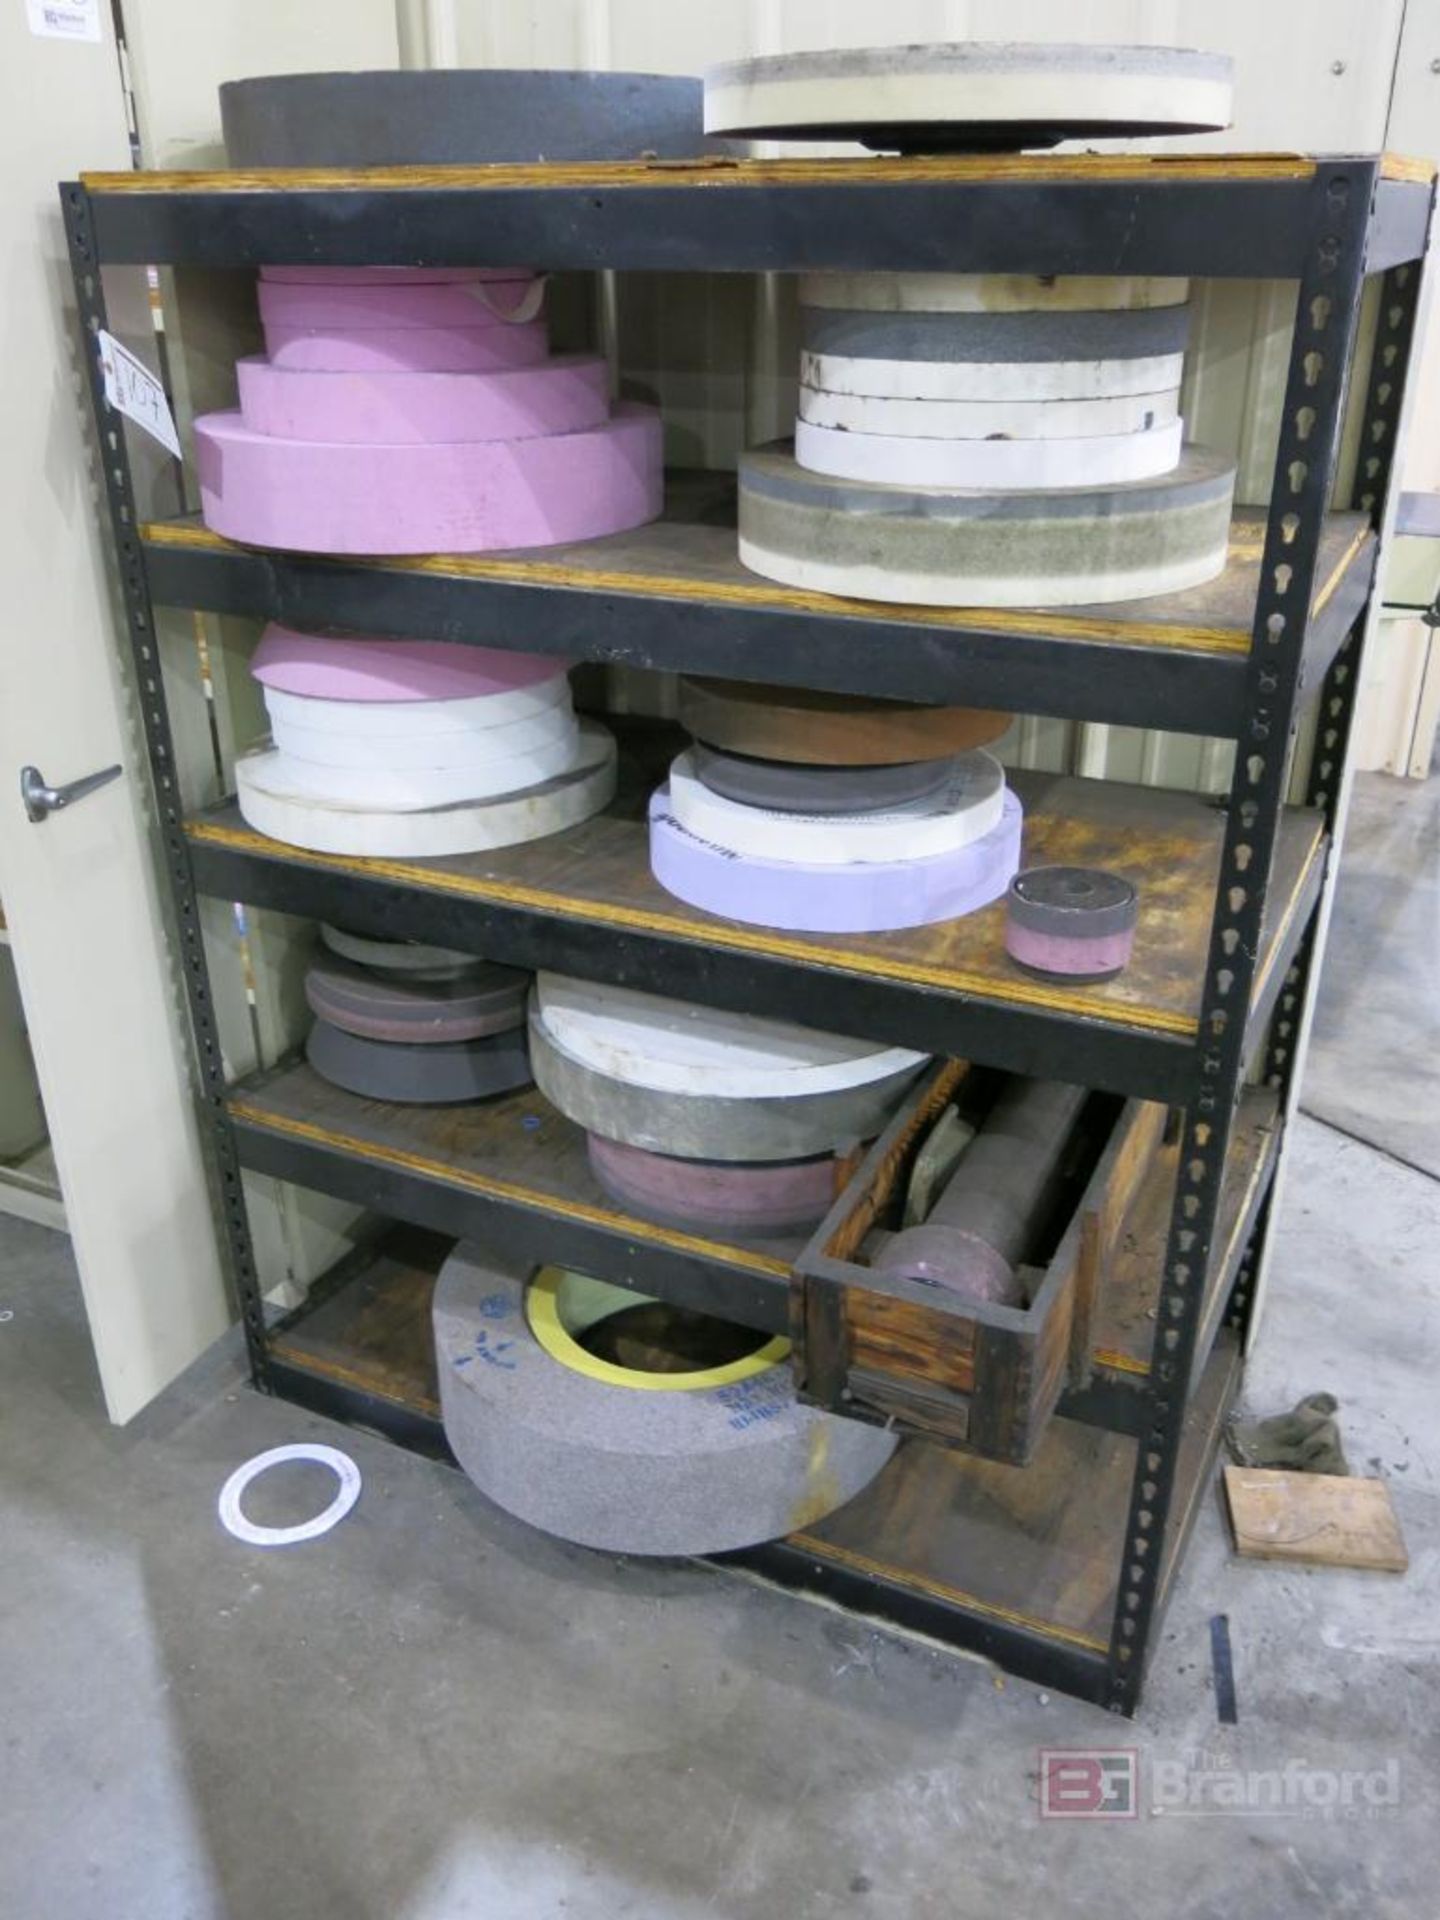 Multi-Shelf Shelving Unit w/ OD ID Grinding Wheels